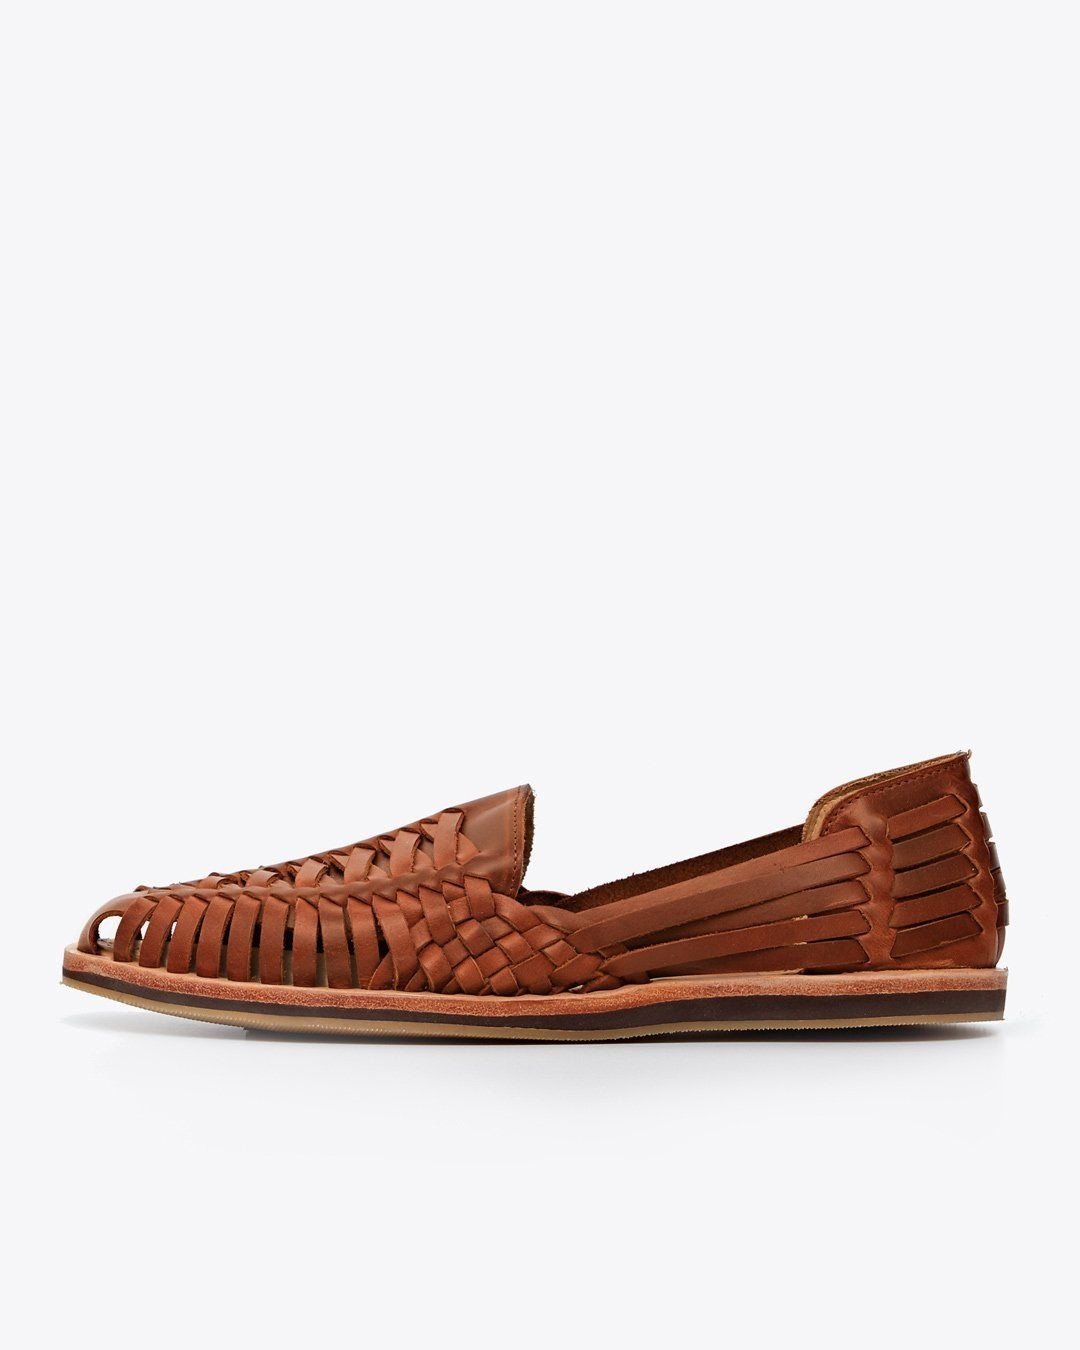 Buy ID Tan Huarache Sandals Shoes for Men Online at Regal Shoes 7542012